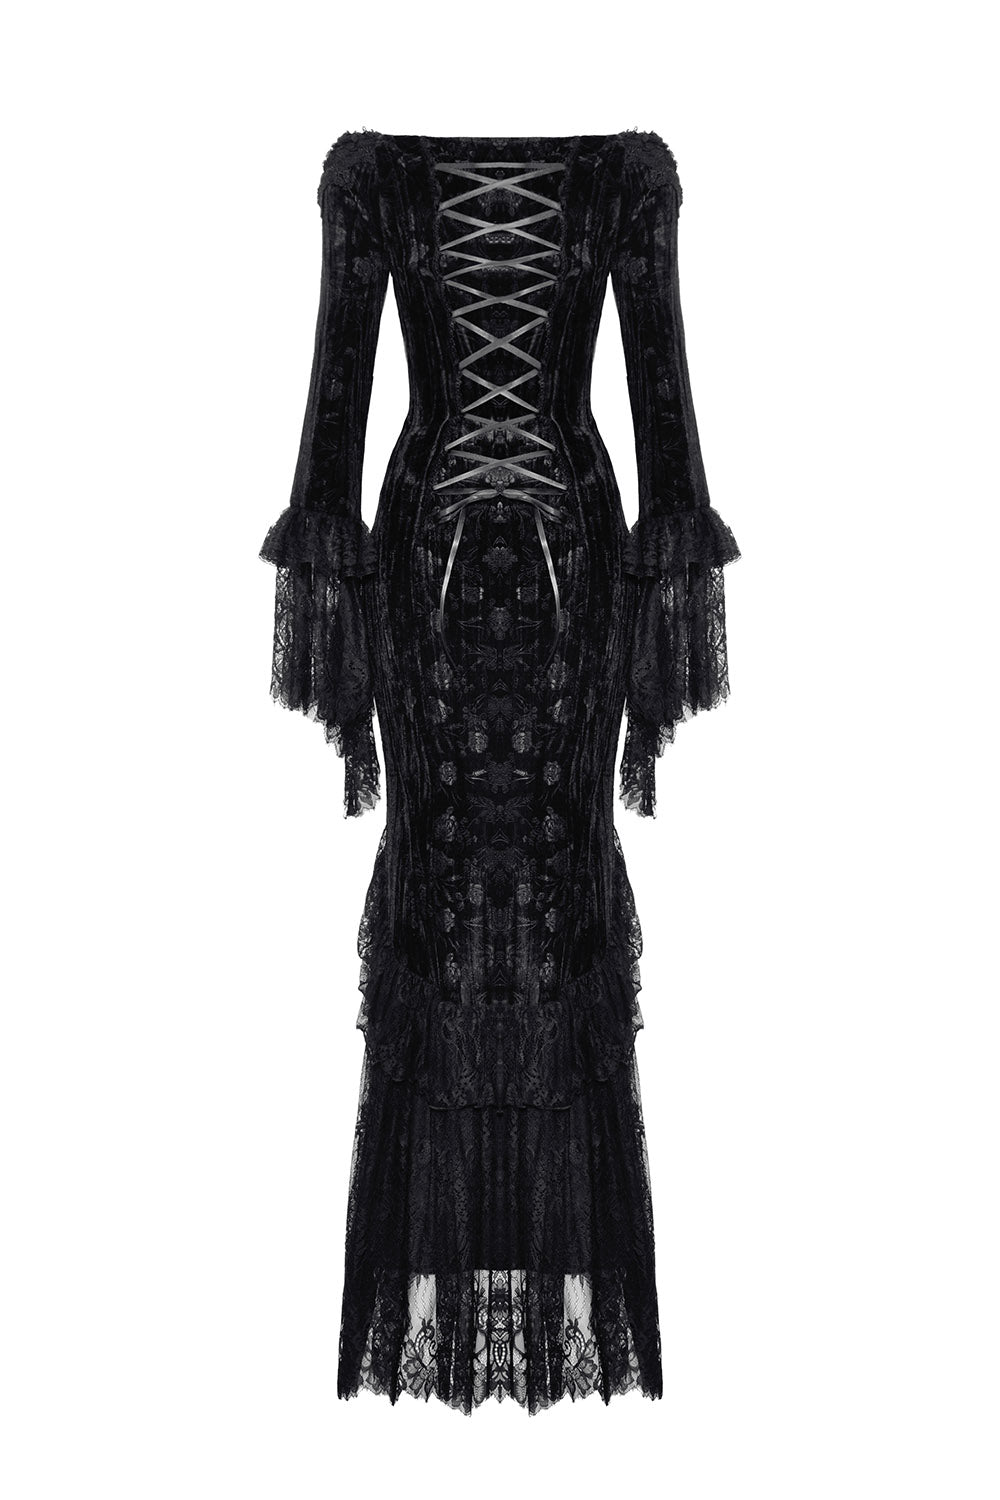 black corset gothic dress